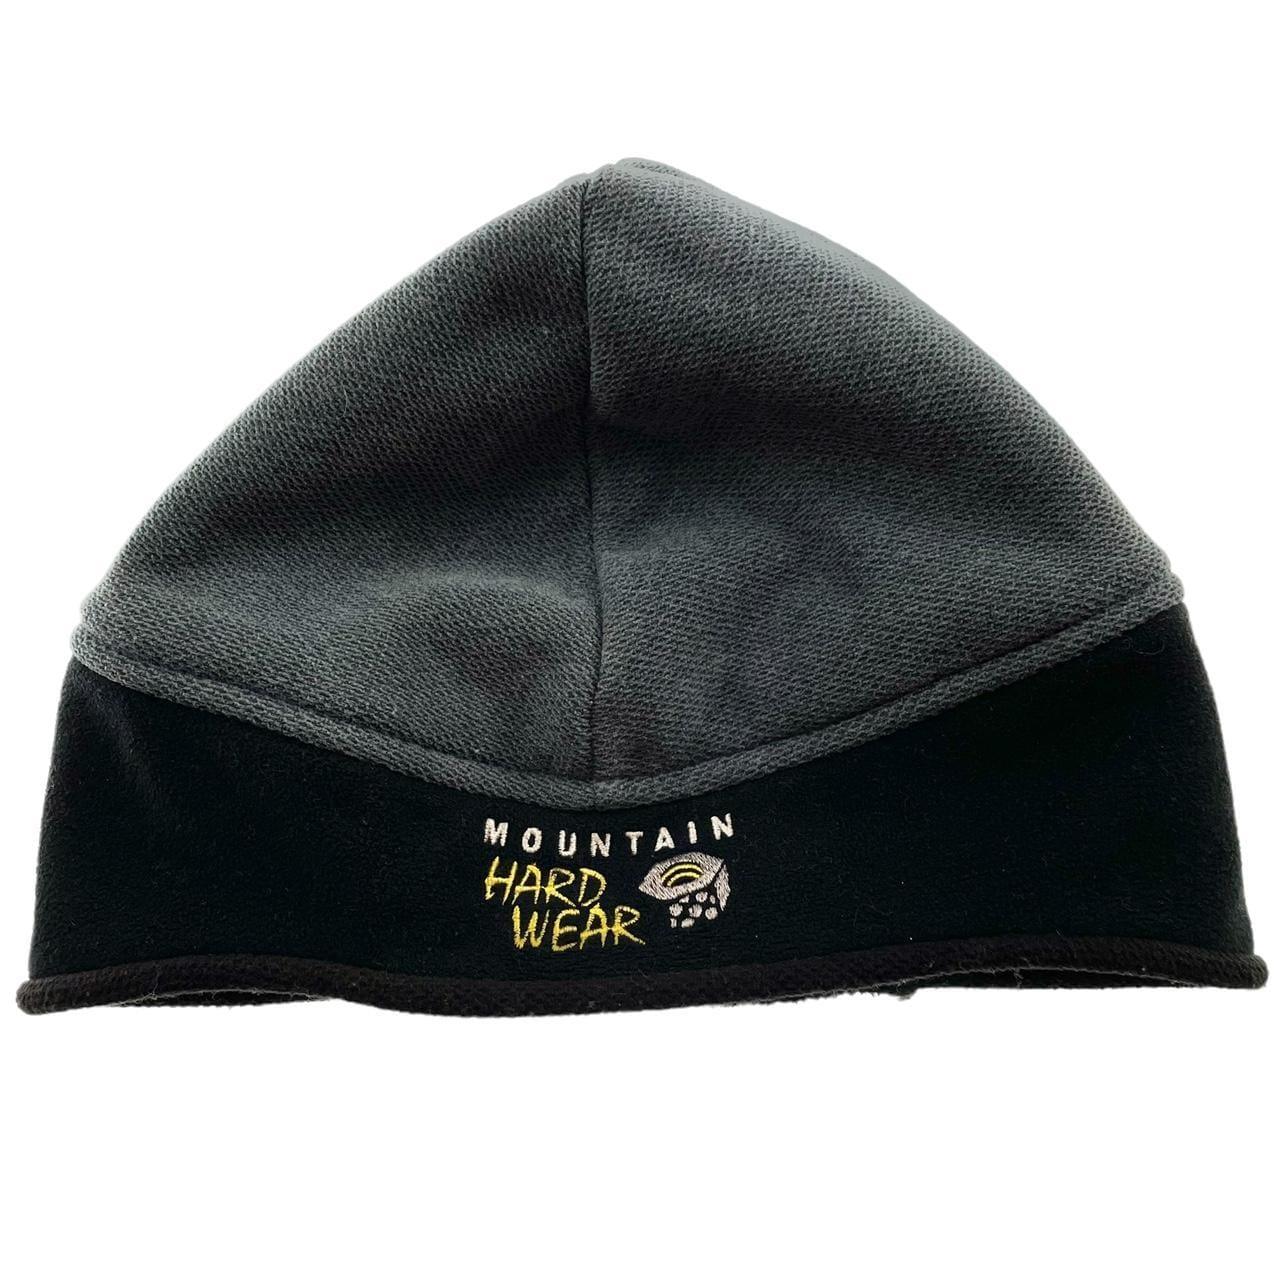 Vintage Mountain hardware fleece hat cap - Known Source